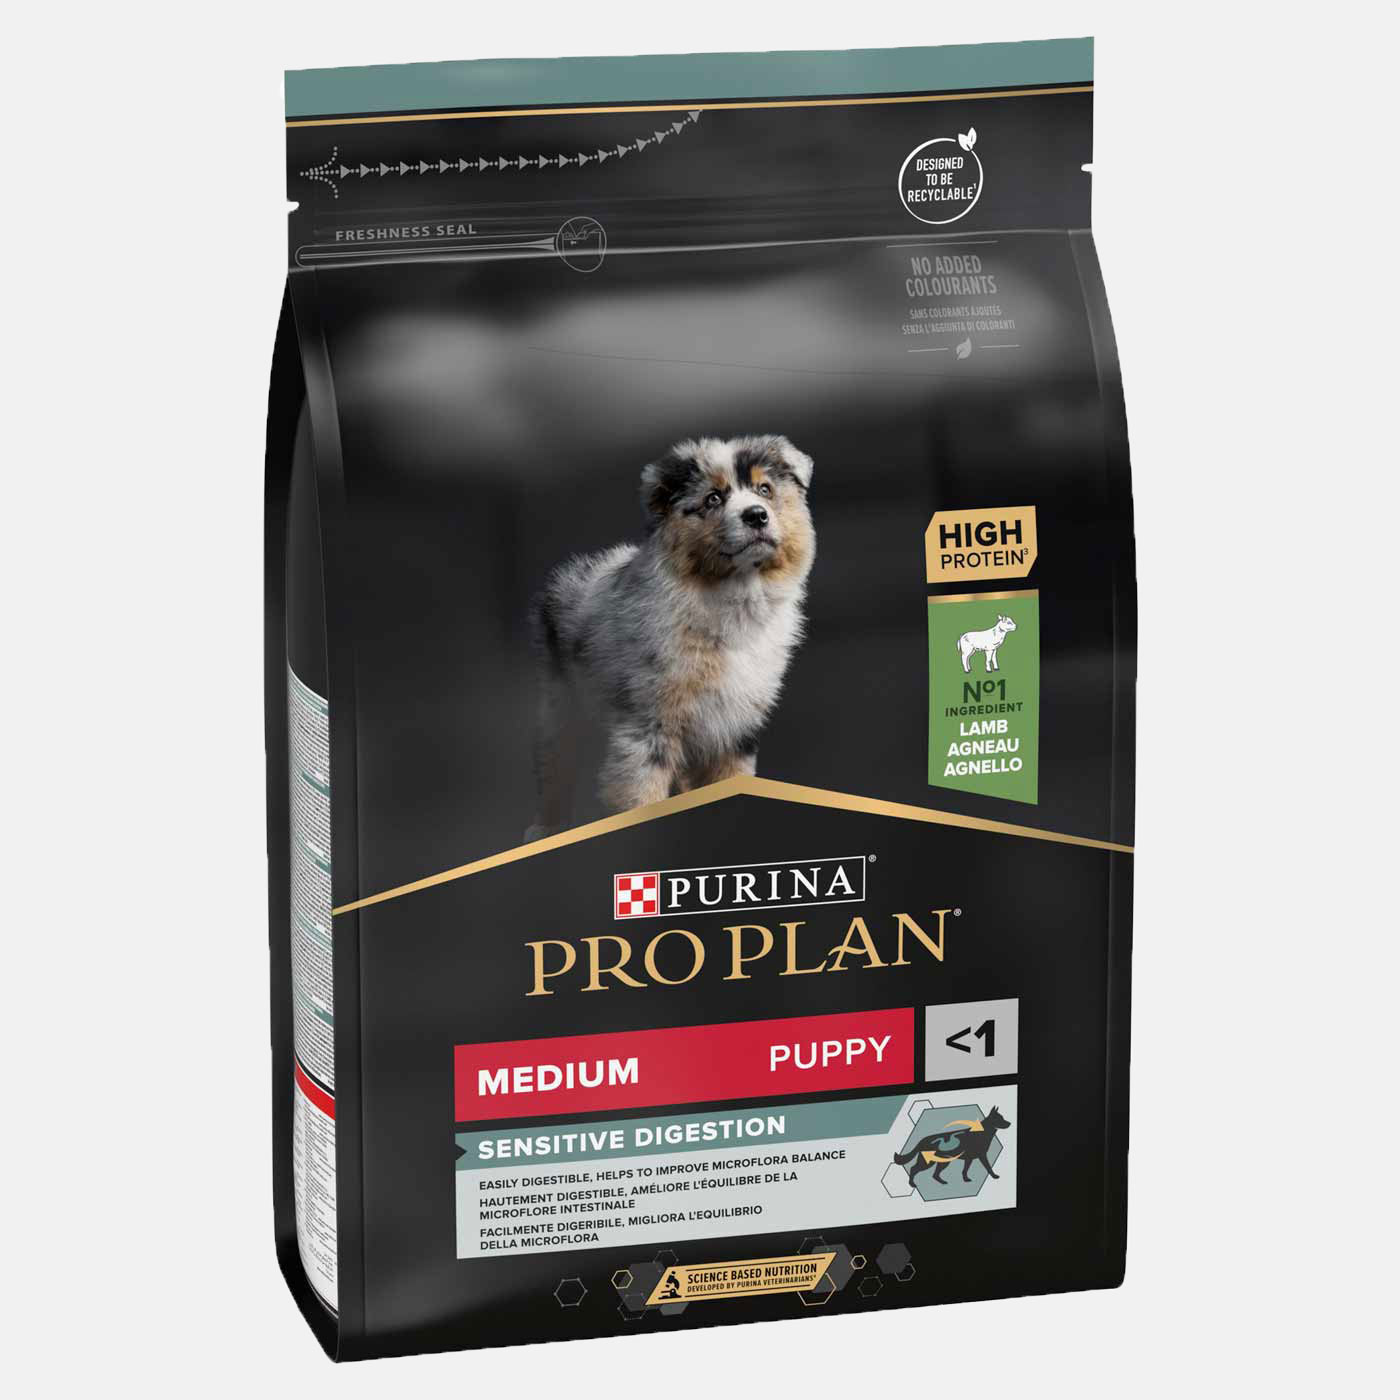 PRO PLAN Medium Puppy Sensitive Digestion Dry Dog Food with Lamb